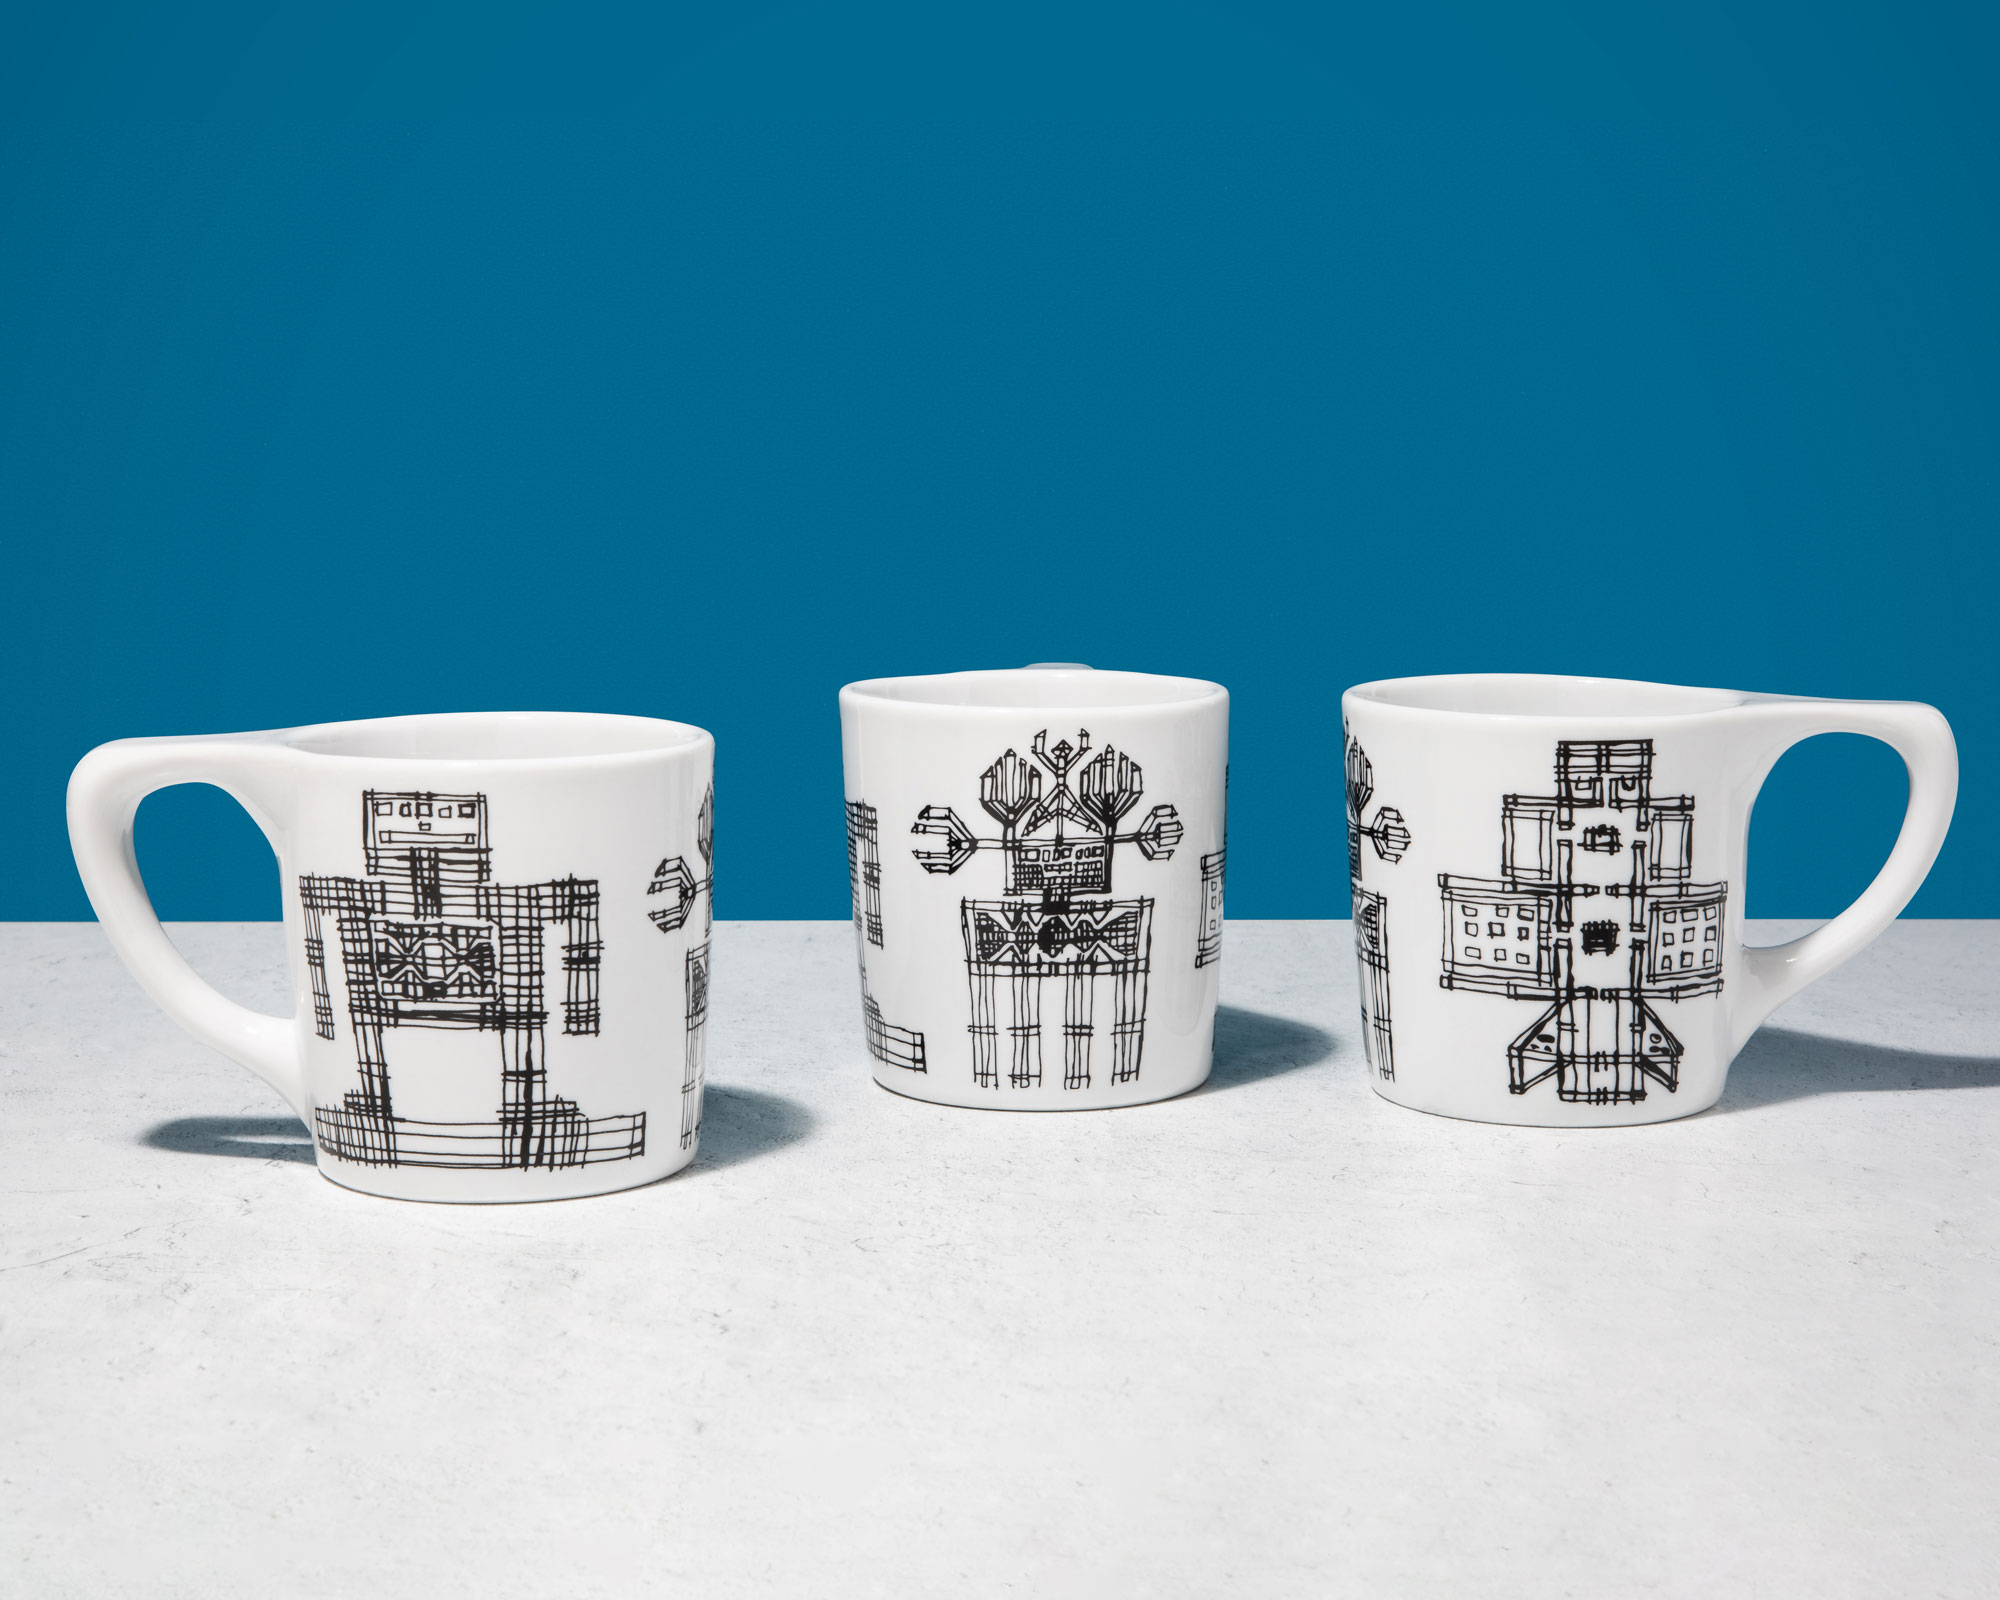 notNeutral Launches Artist Series Lino Mug Collection - RIOS